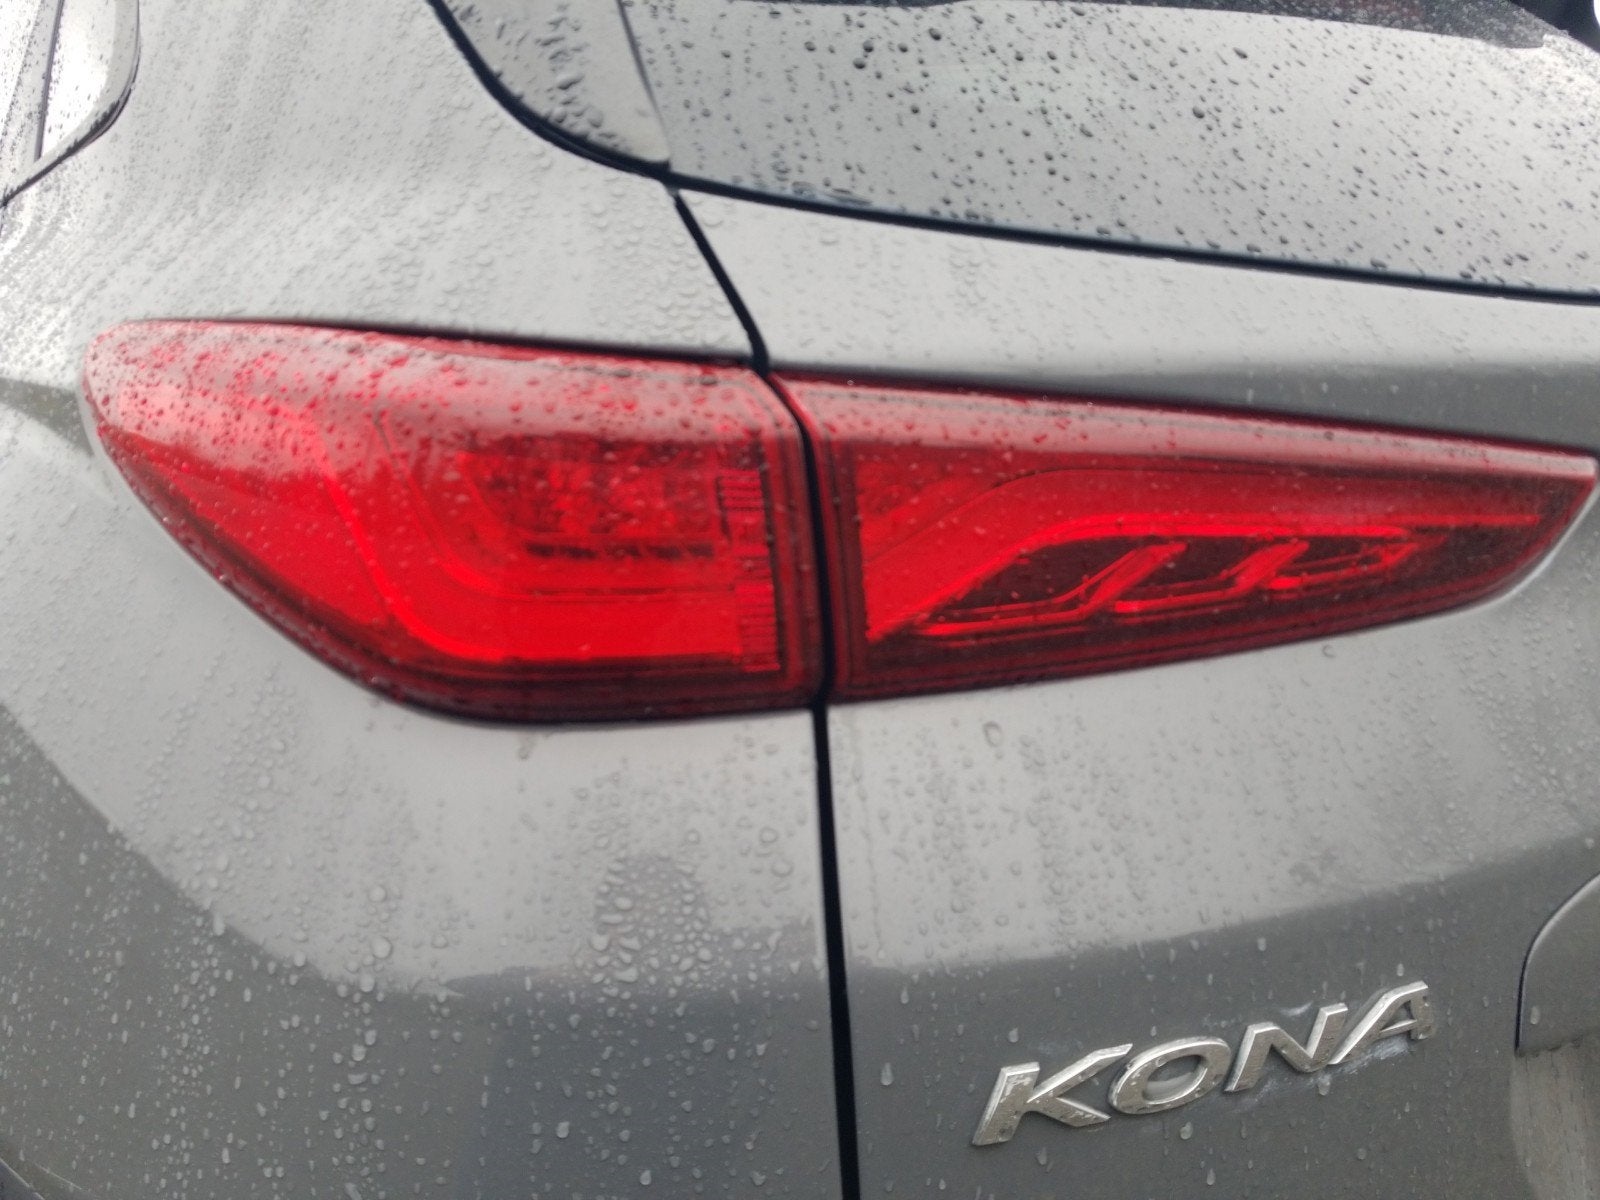 2019 Hyundai Kona Electric Ultimate